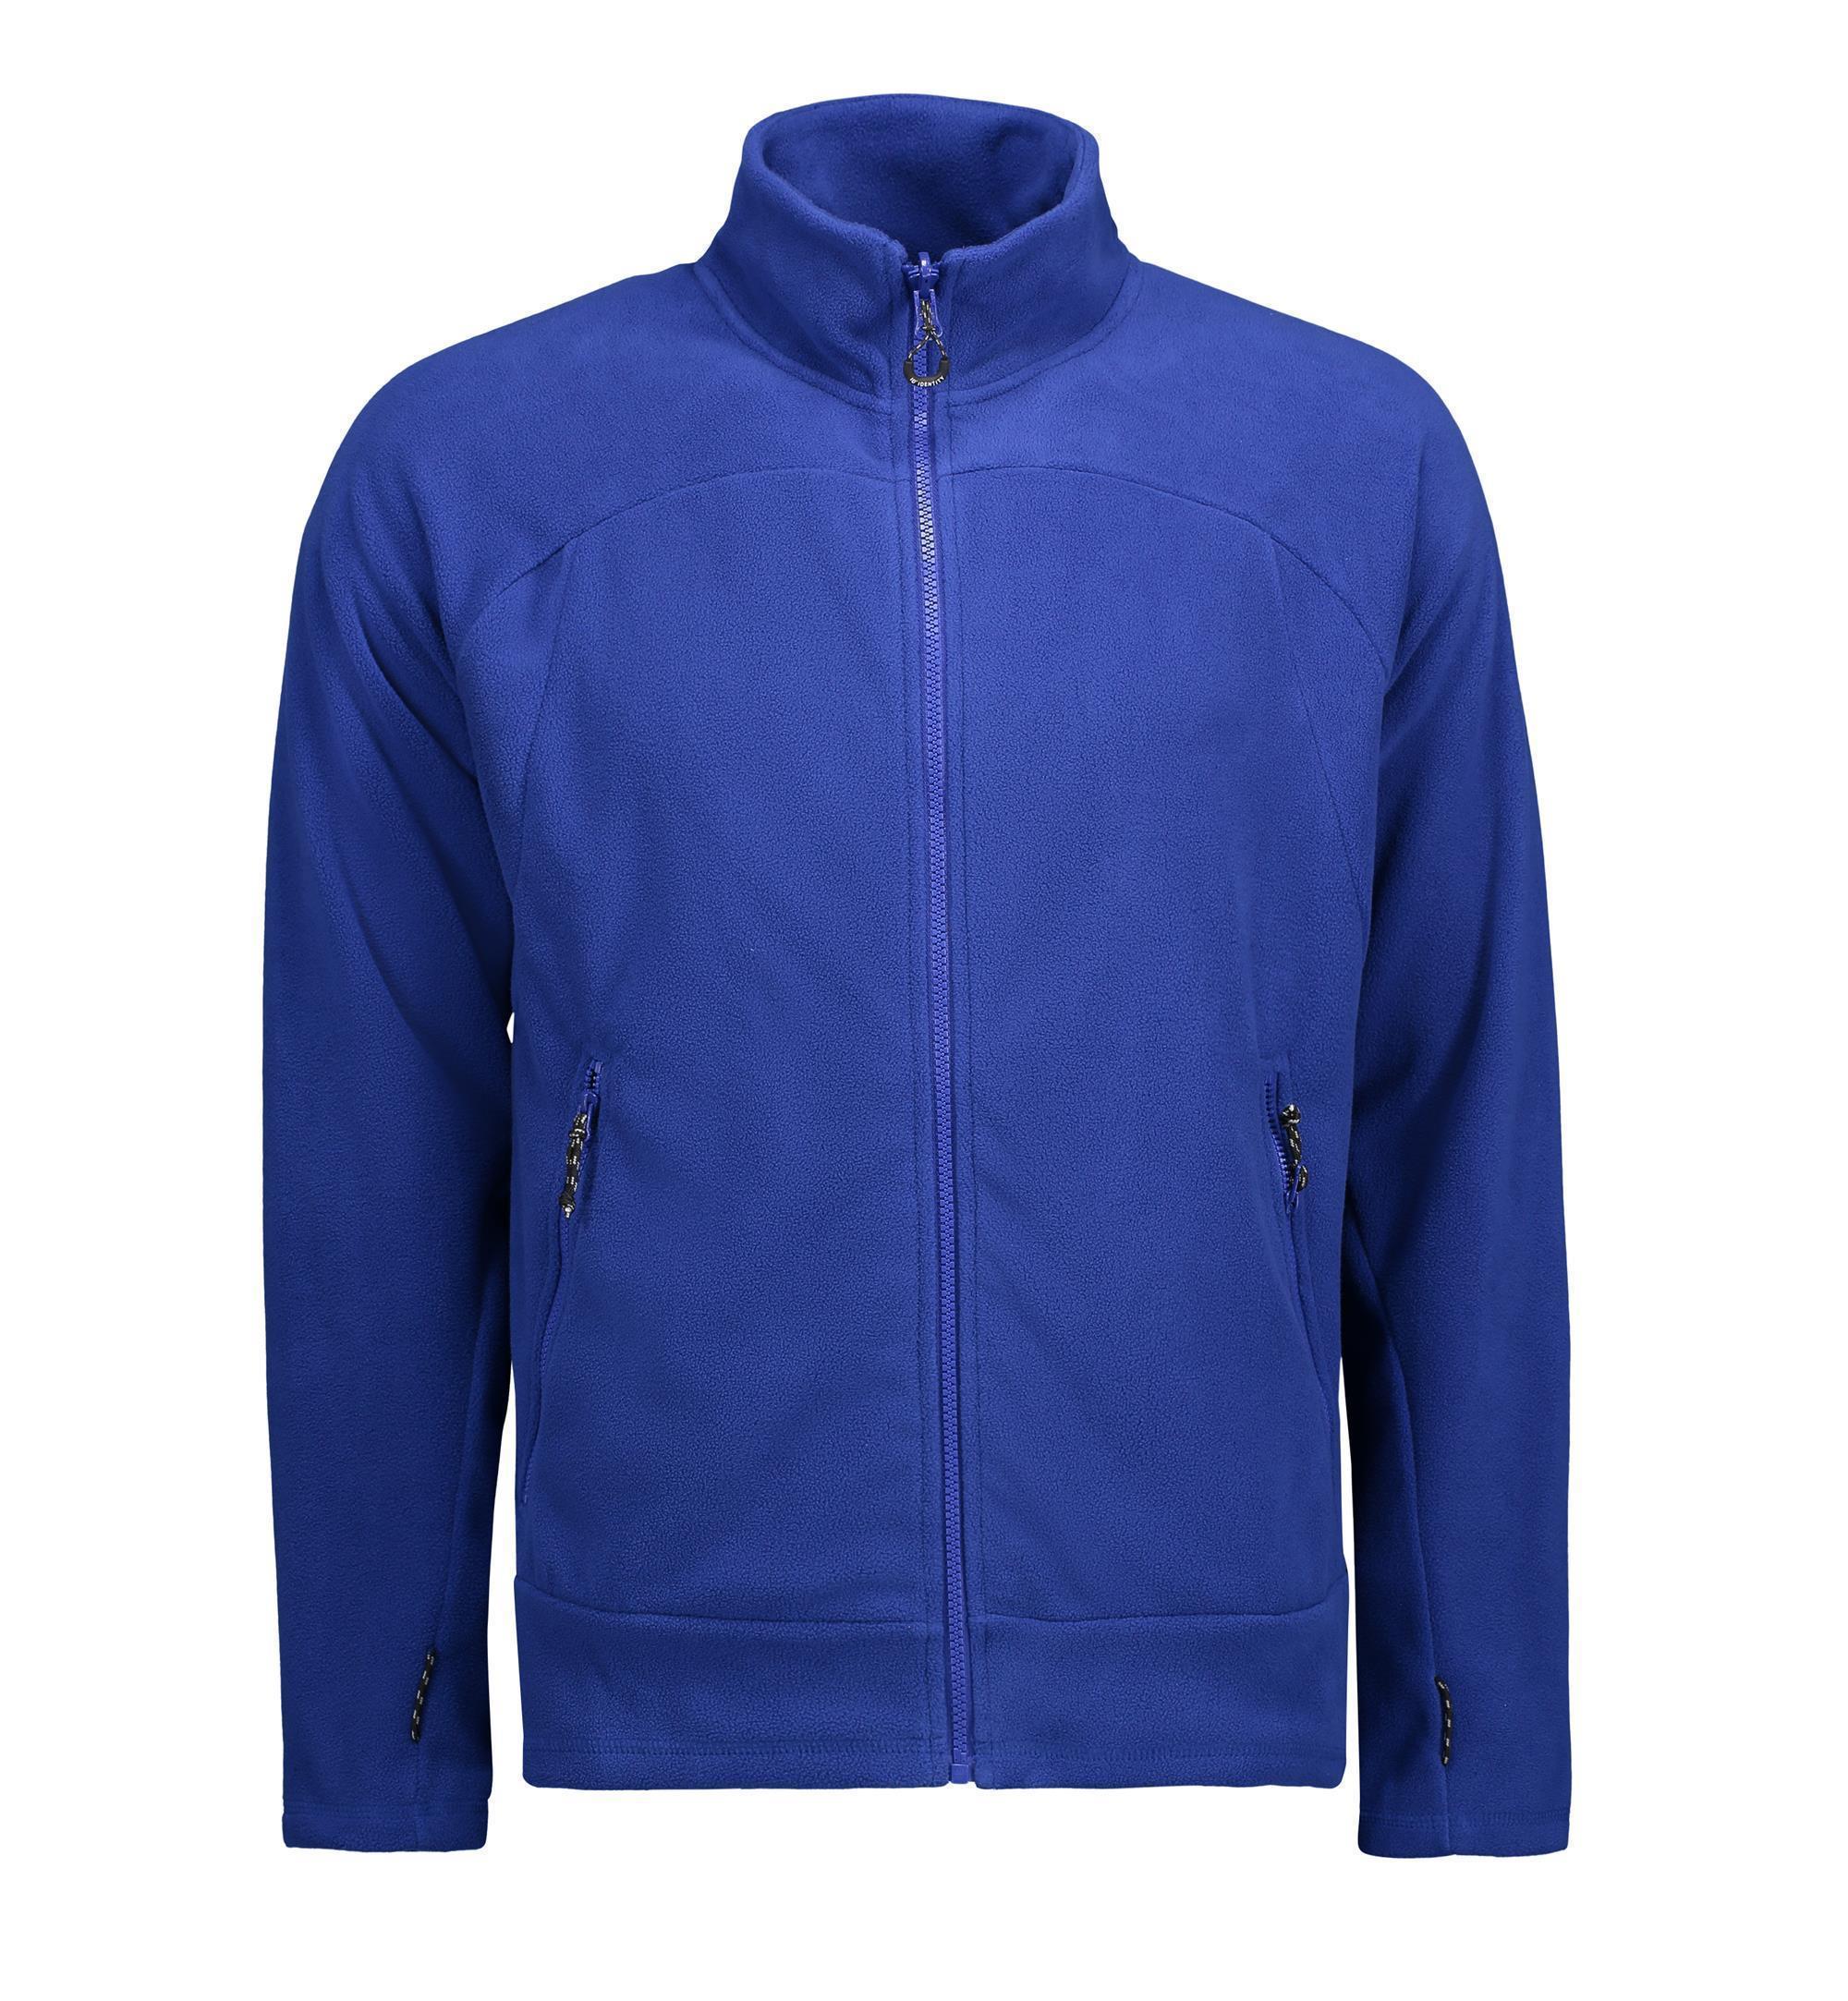 Men's fleece jacket Zip'n'Mix 280gr/m² ID Identity® royal blue XXL